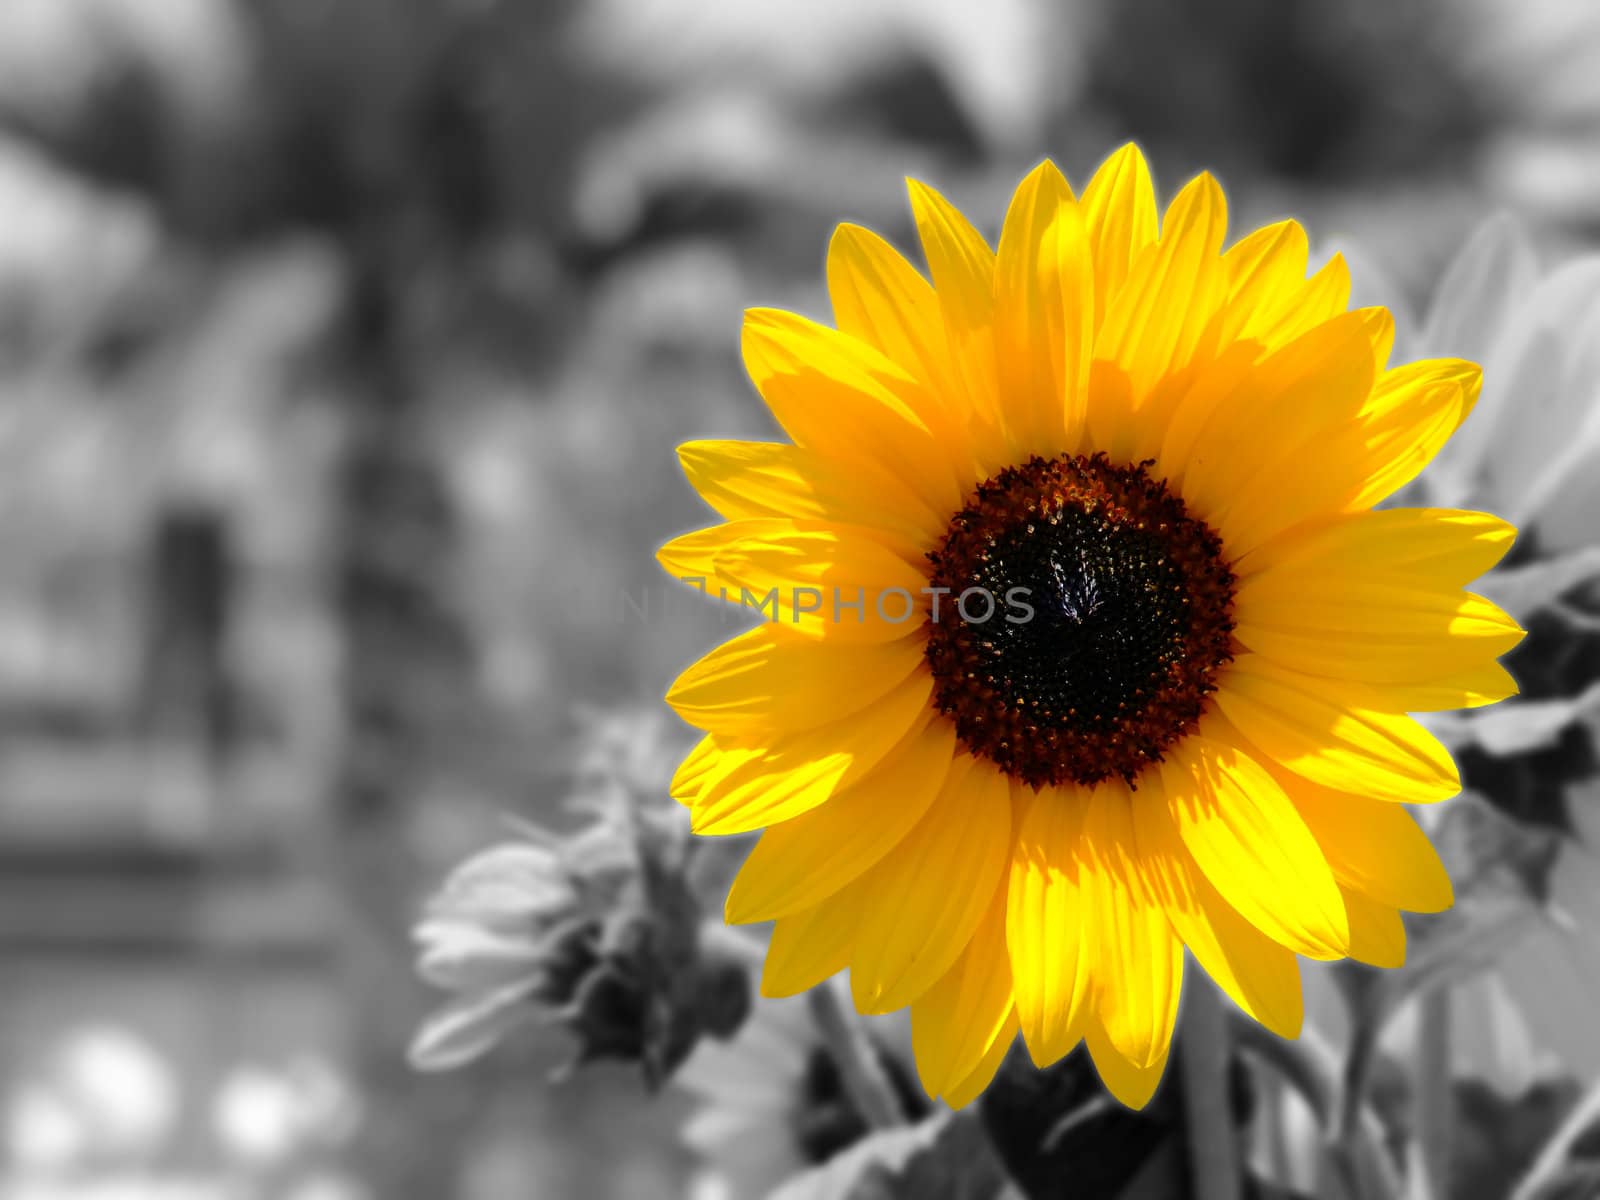 Flora Series - Images depicting various types of Mediterranean flowers - Sunflower